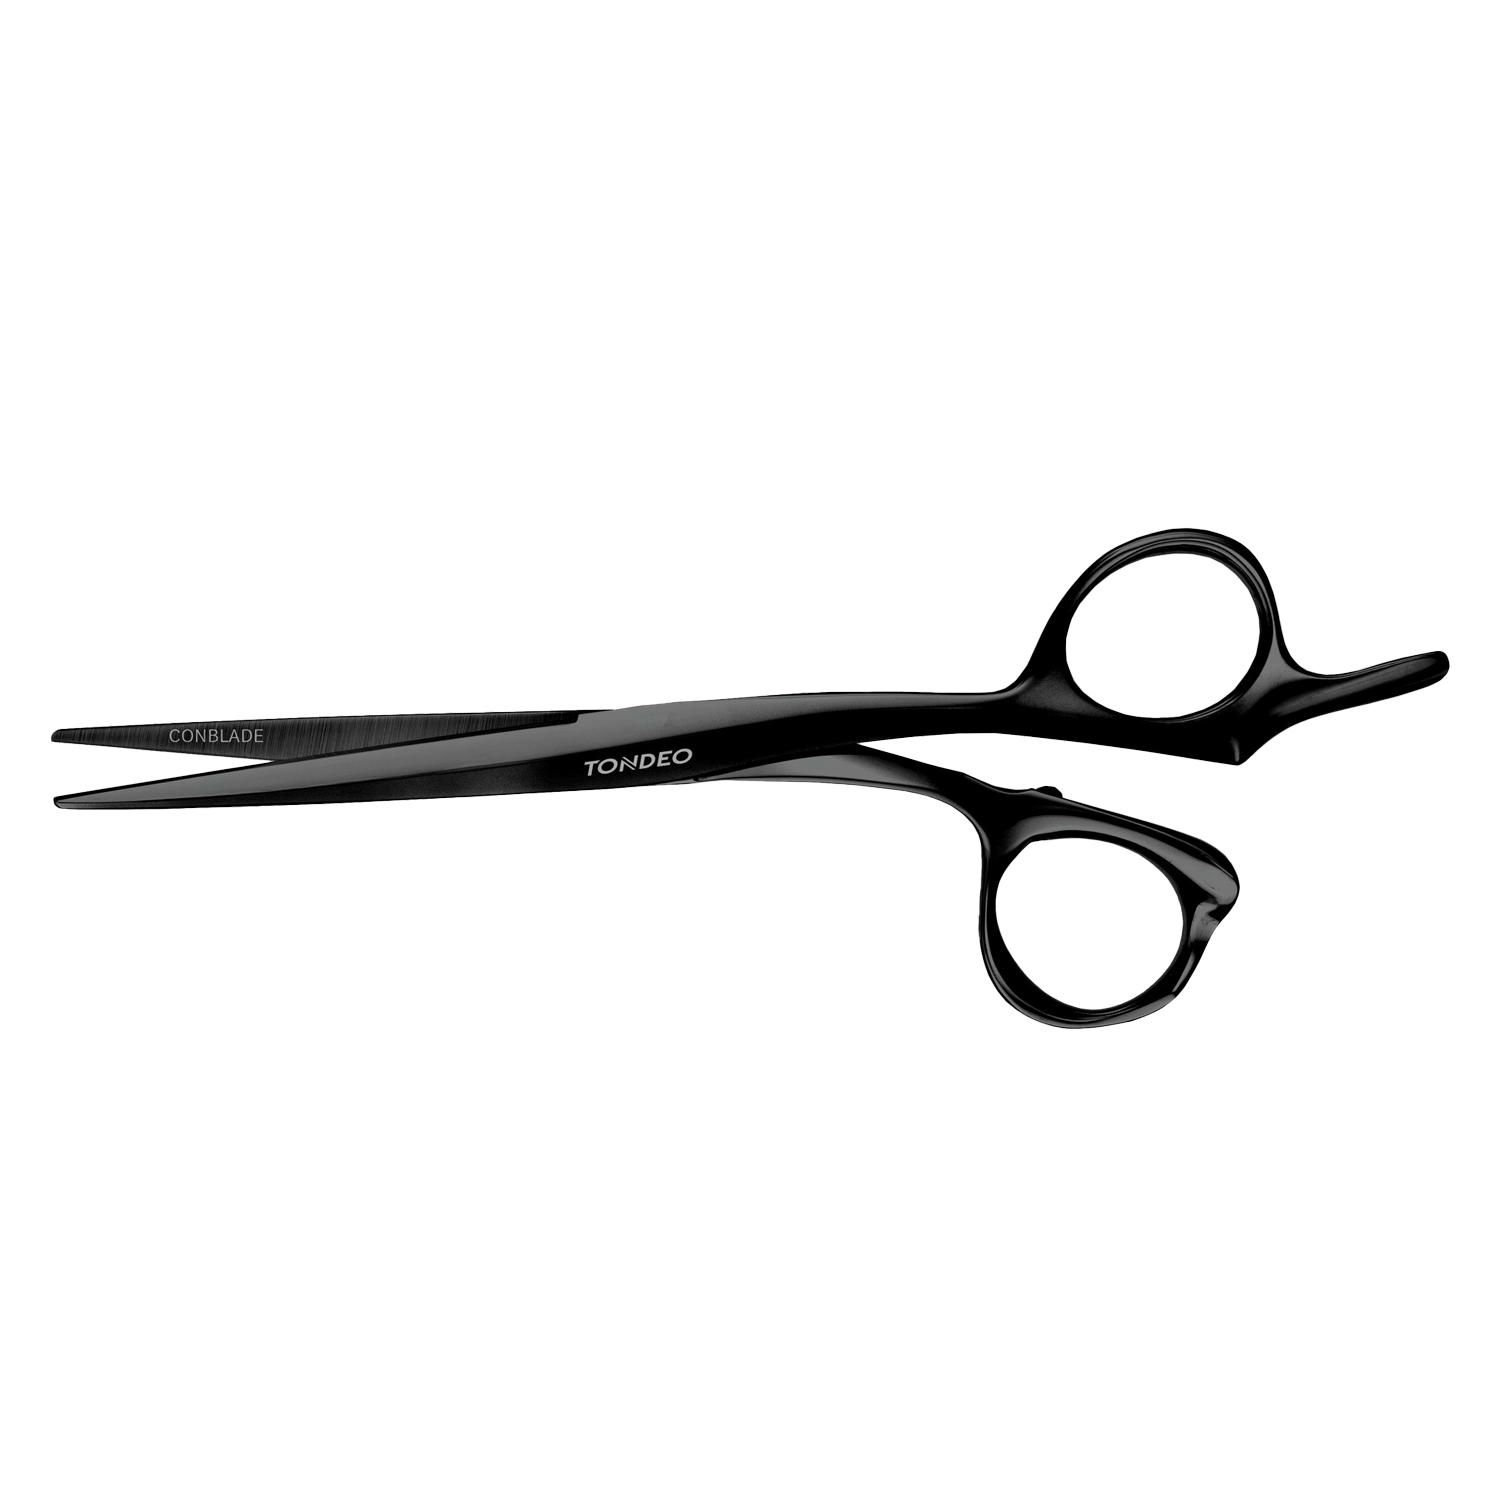 Image du produit de Tondeo Scissors - Zentao Black Offset Scissors 6.5" CONBLADE